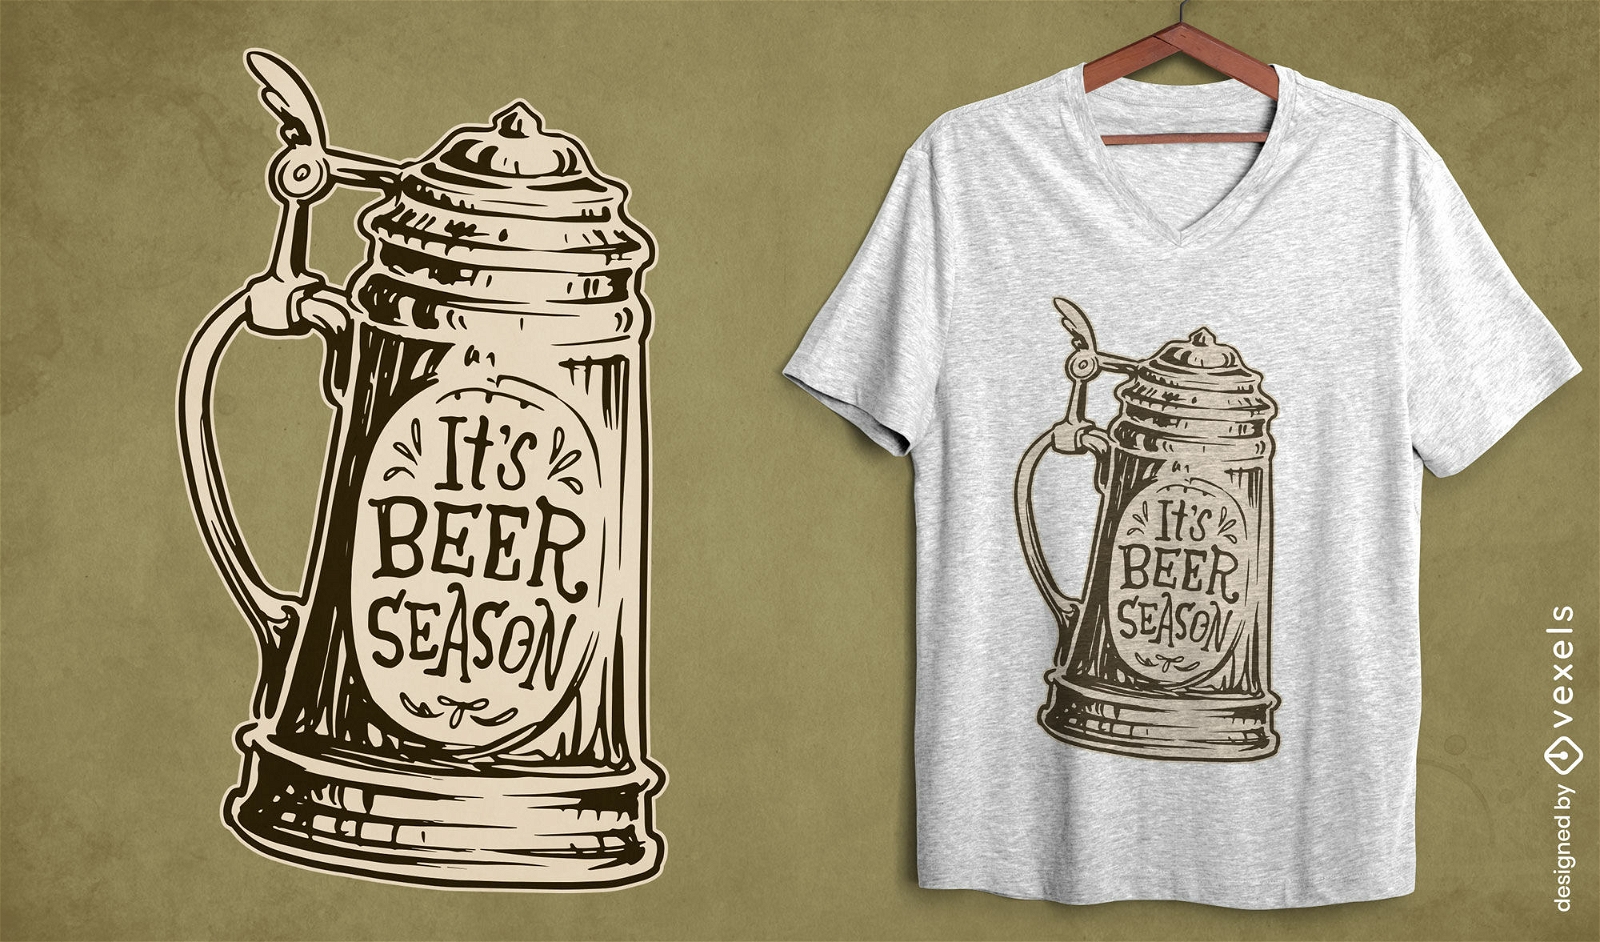 Beer season vintage jar t-shirt design